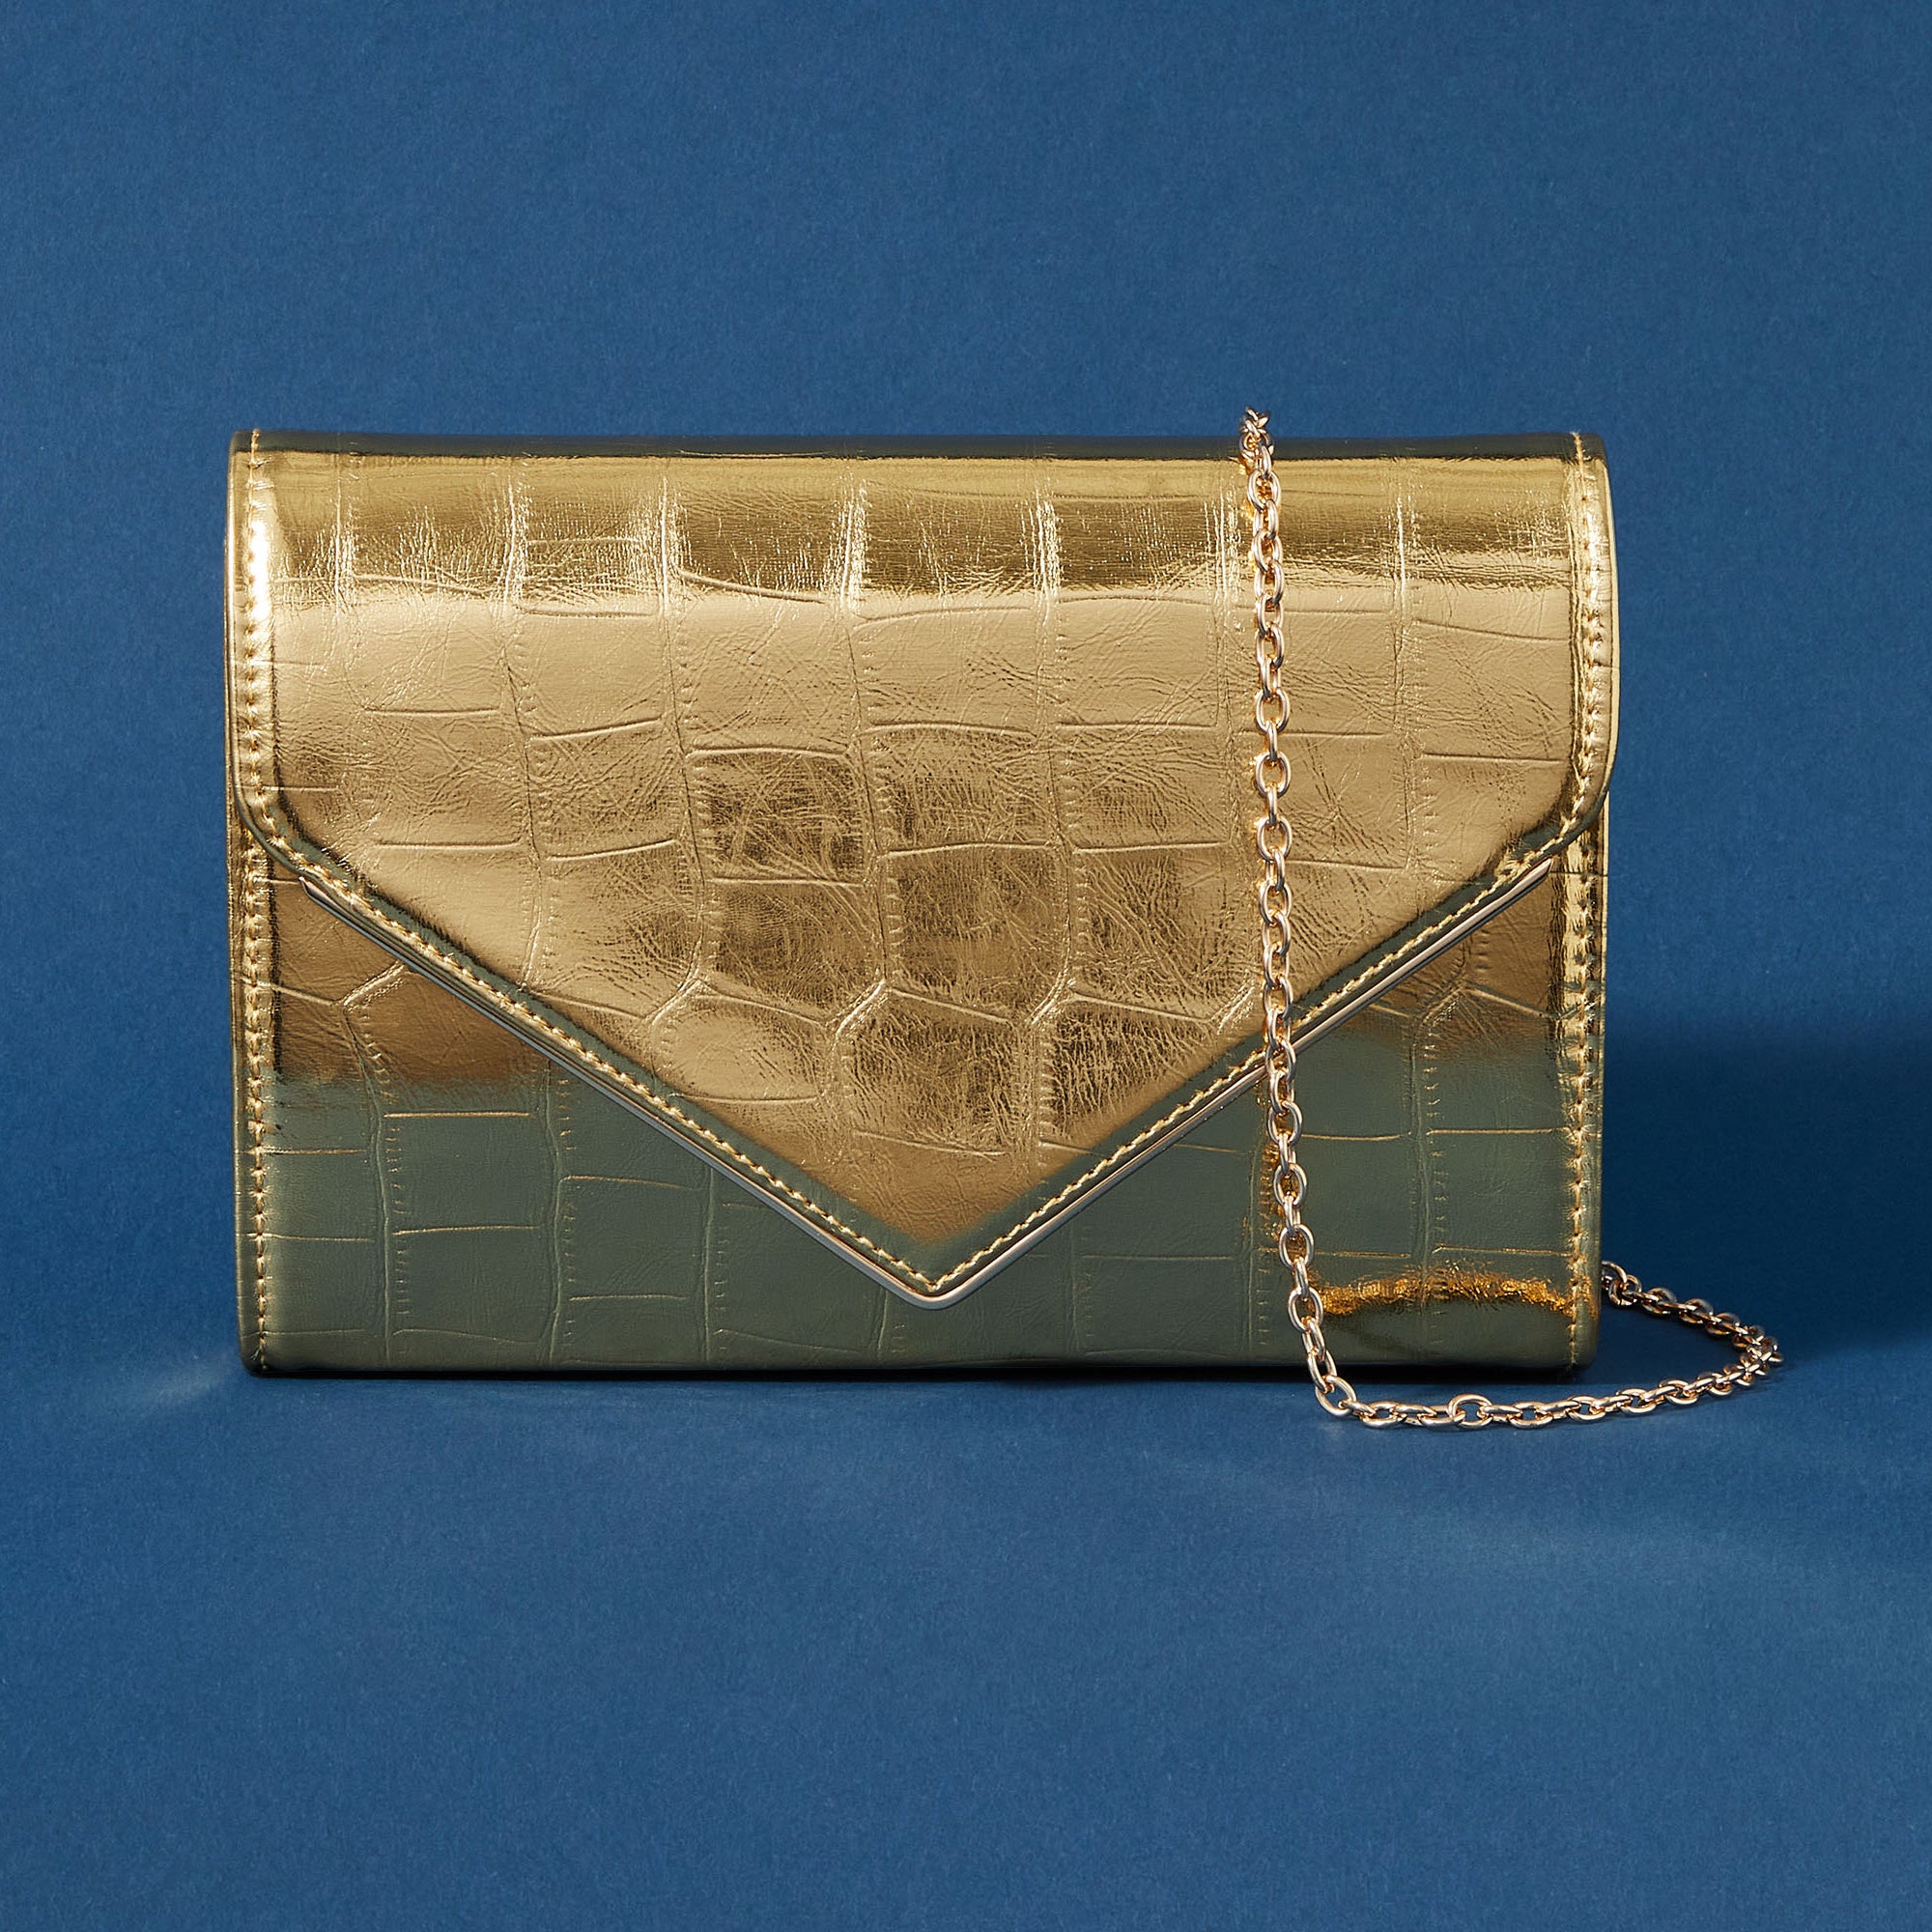 Buy Envelope Wristlet Clutch Crossbody Bag with Chain Strap Online